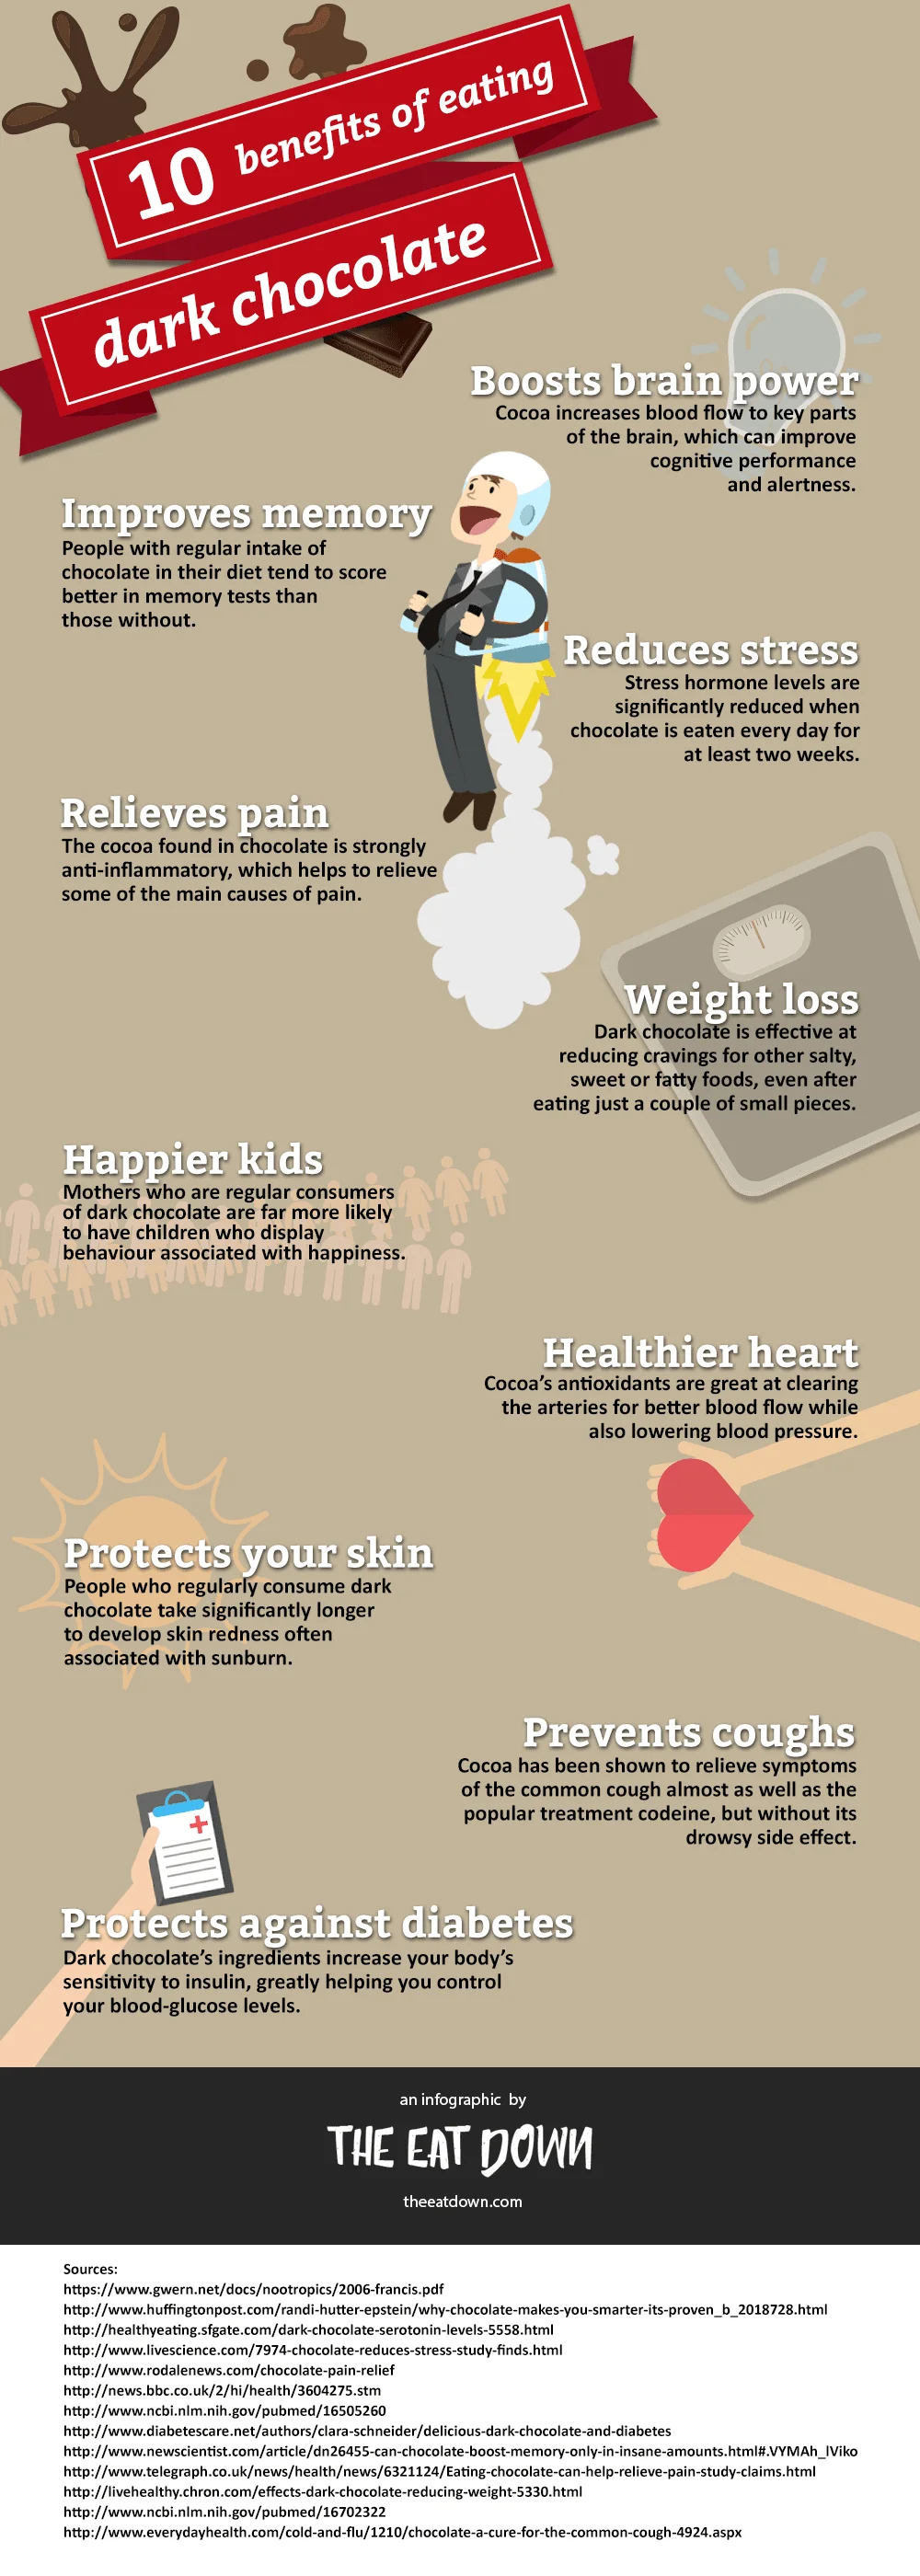 the eat down dark chocolate health benefits infographic